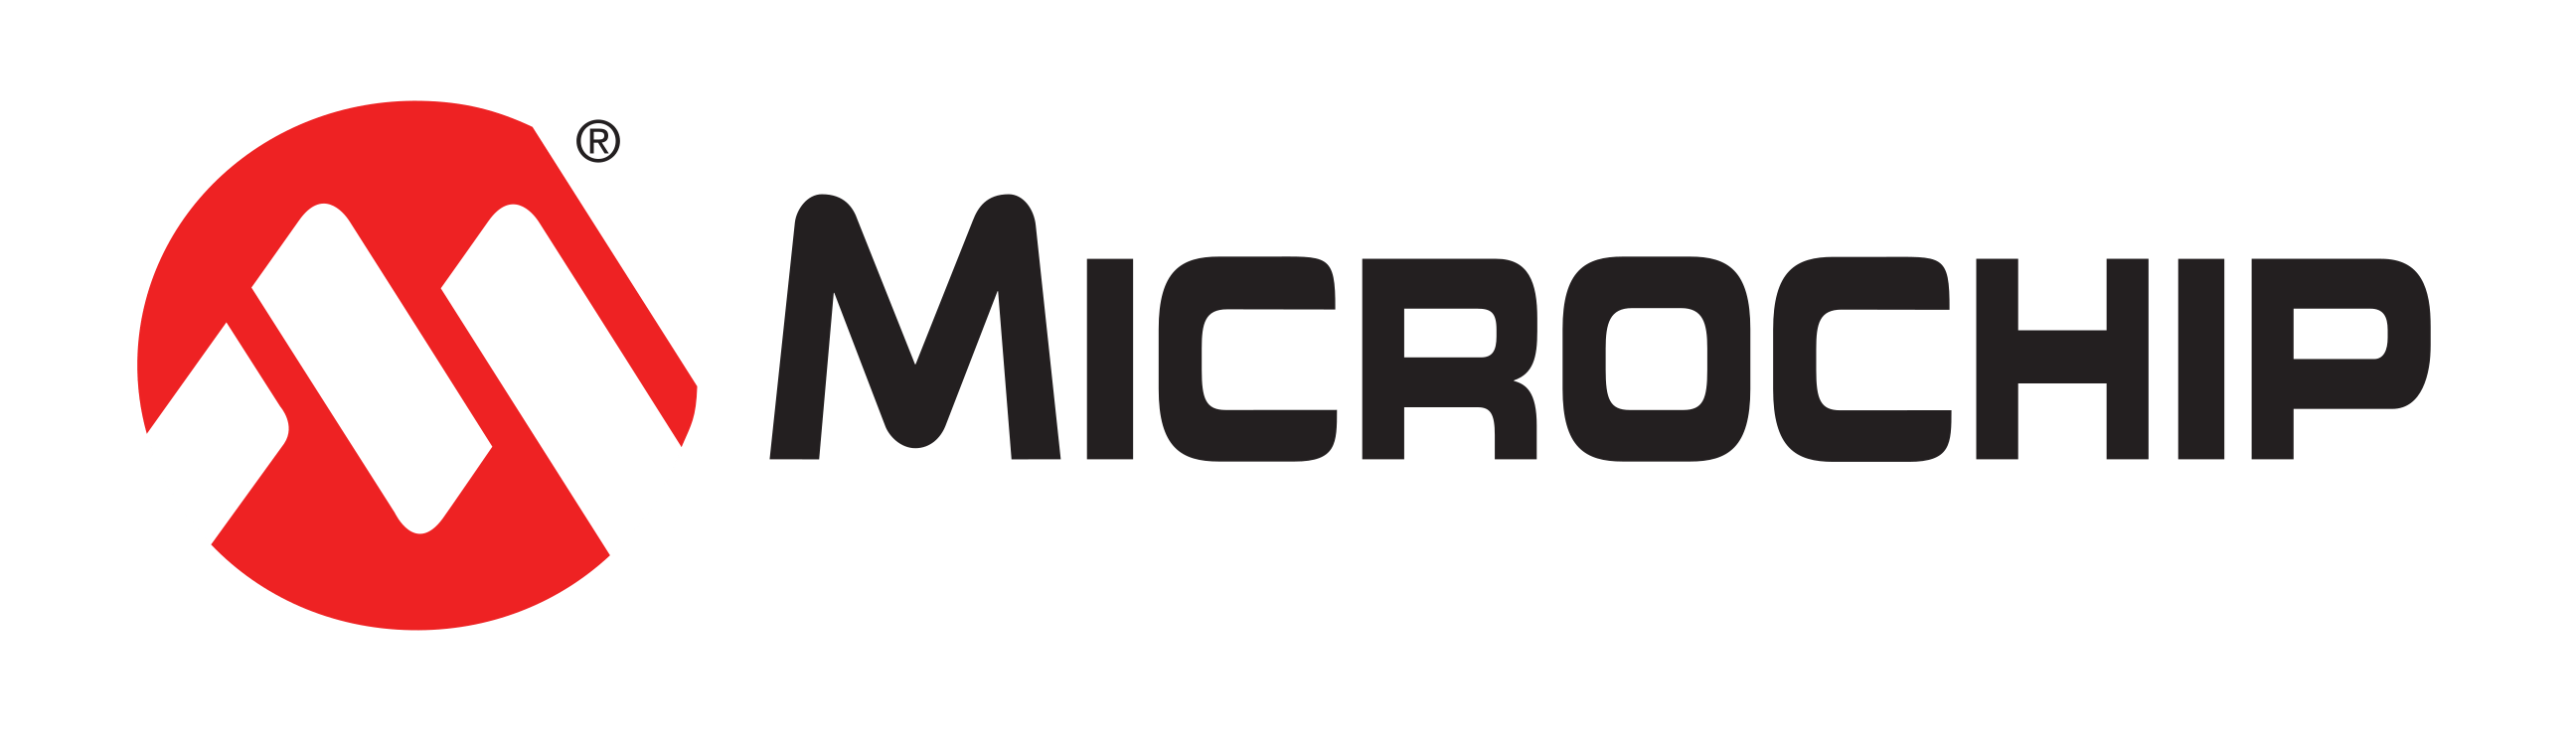 Microchip-logo-png